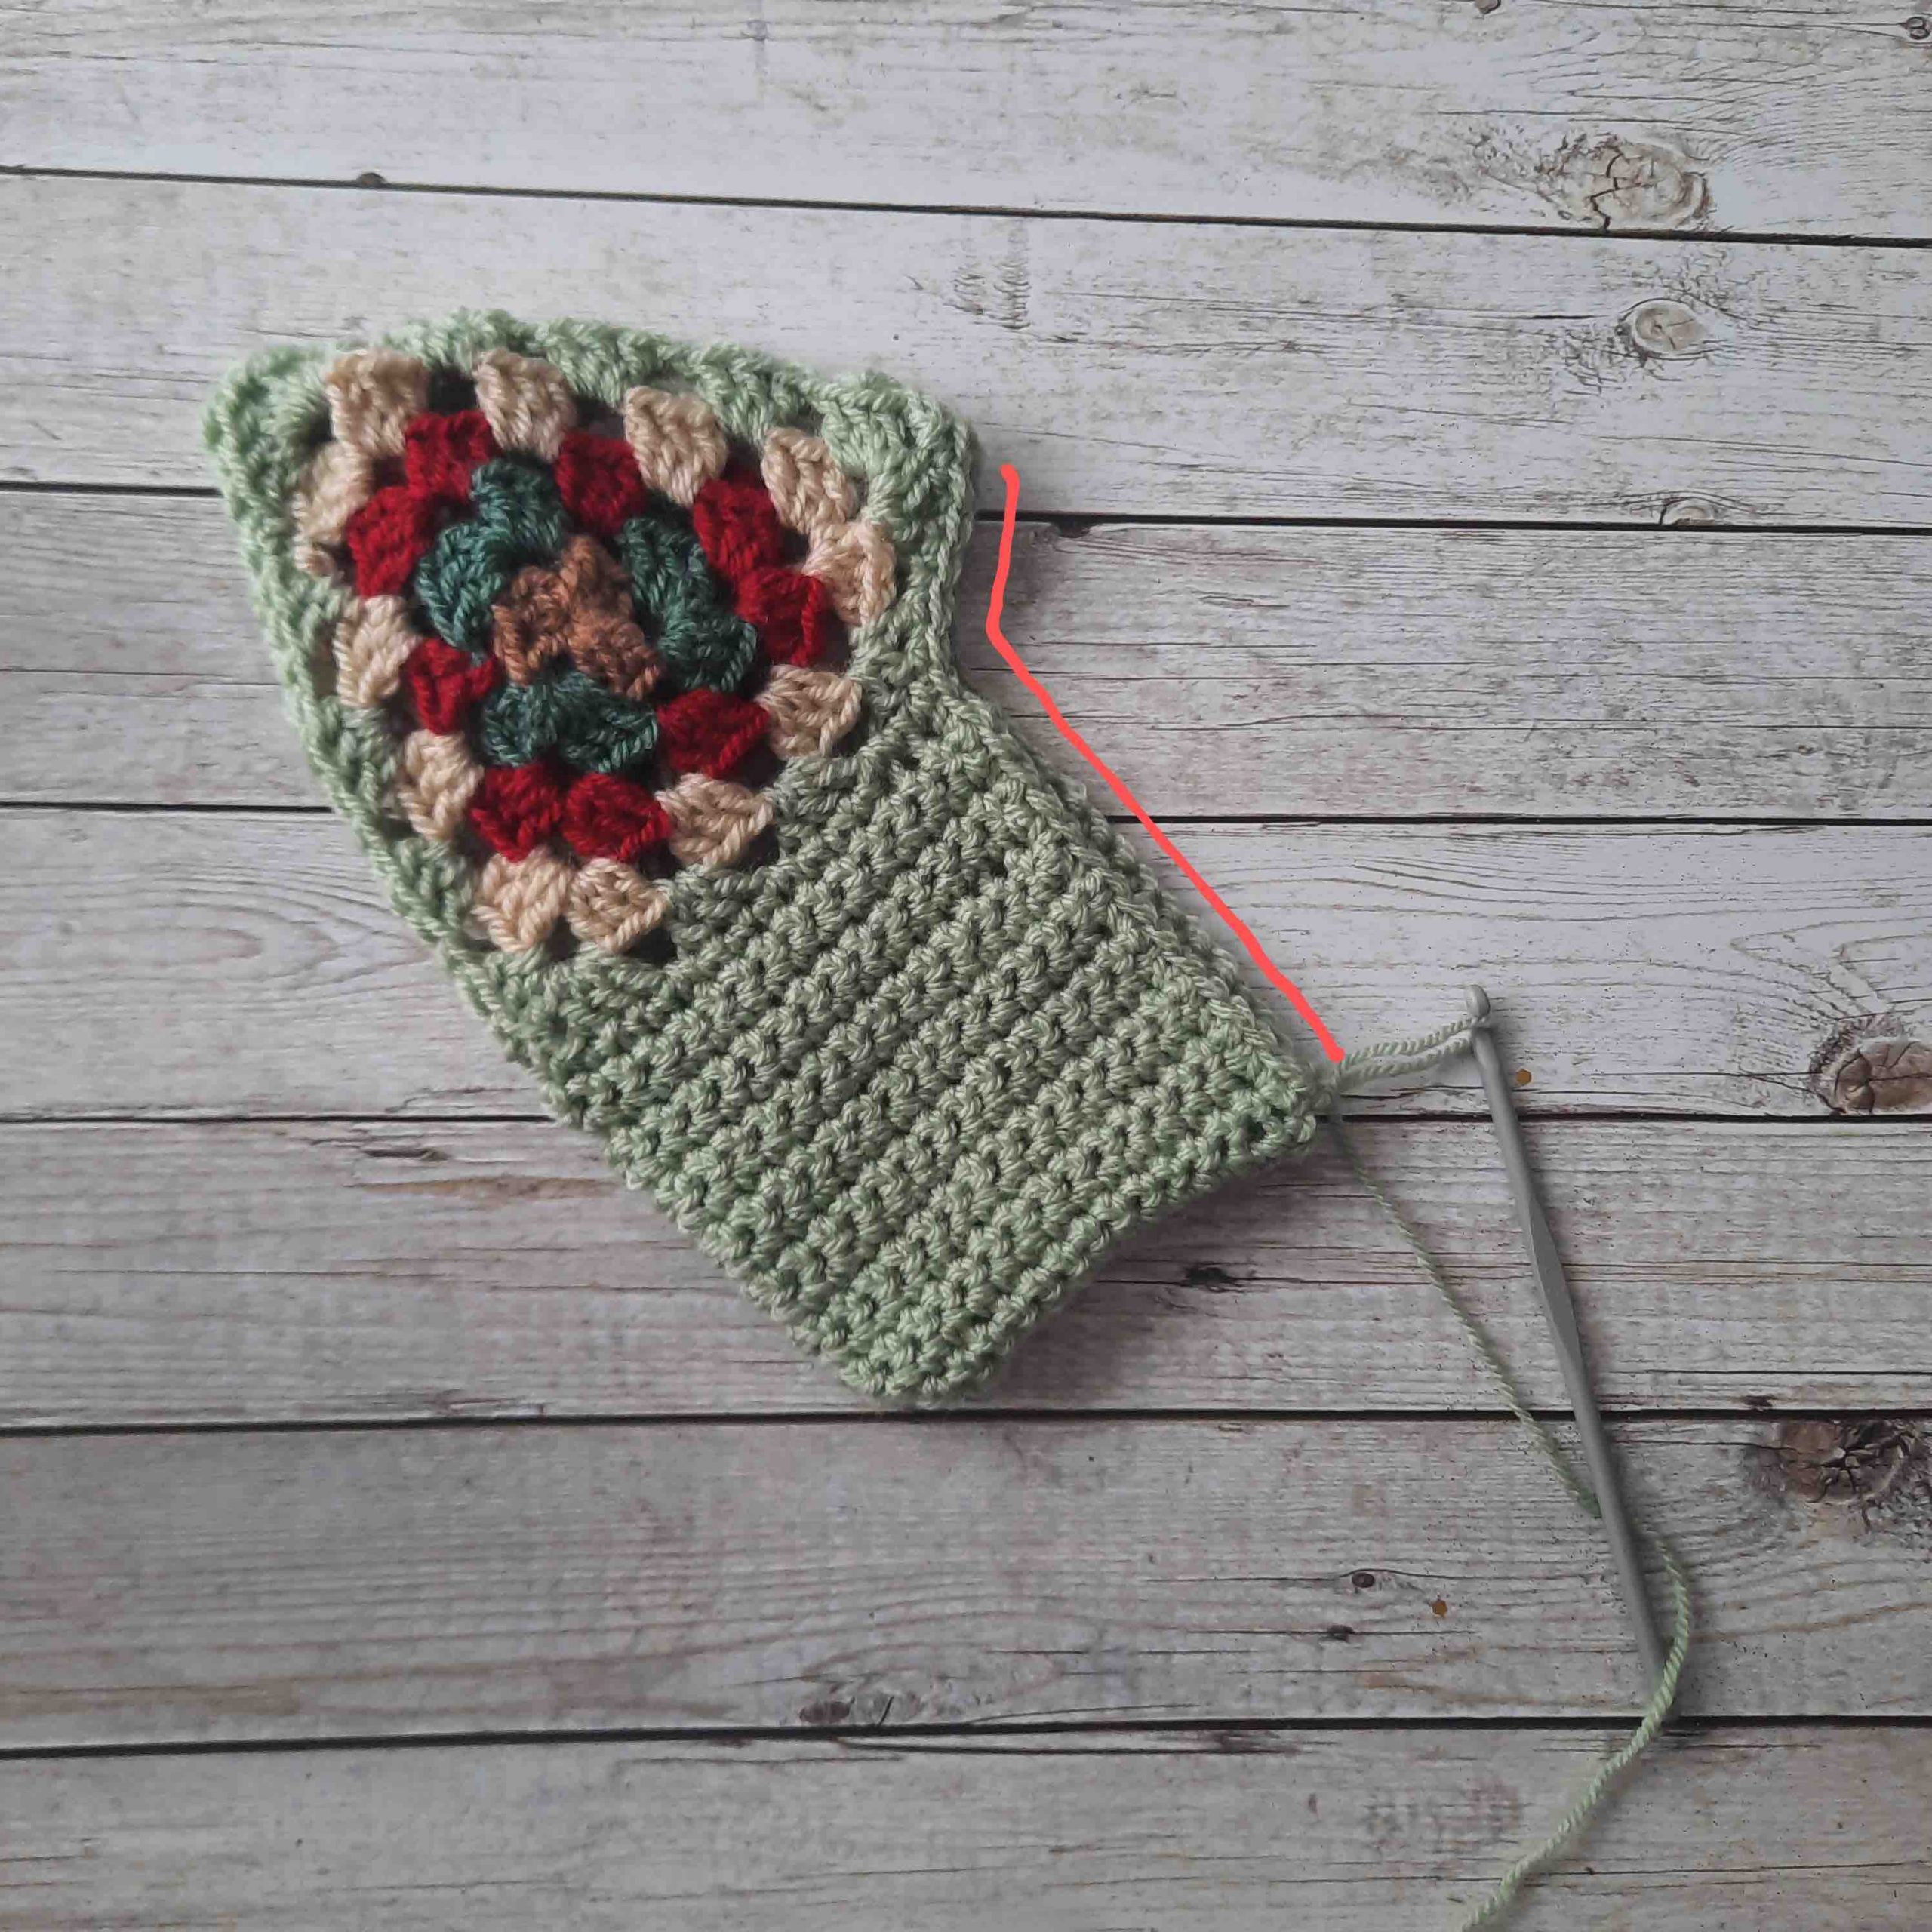 Grandma's crochet slipper pattern